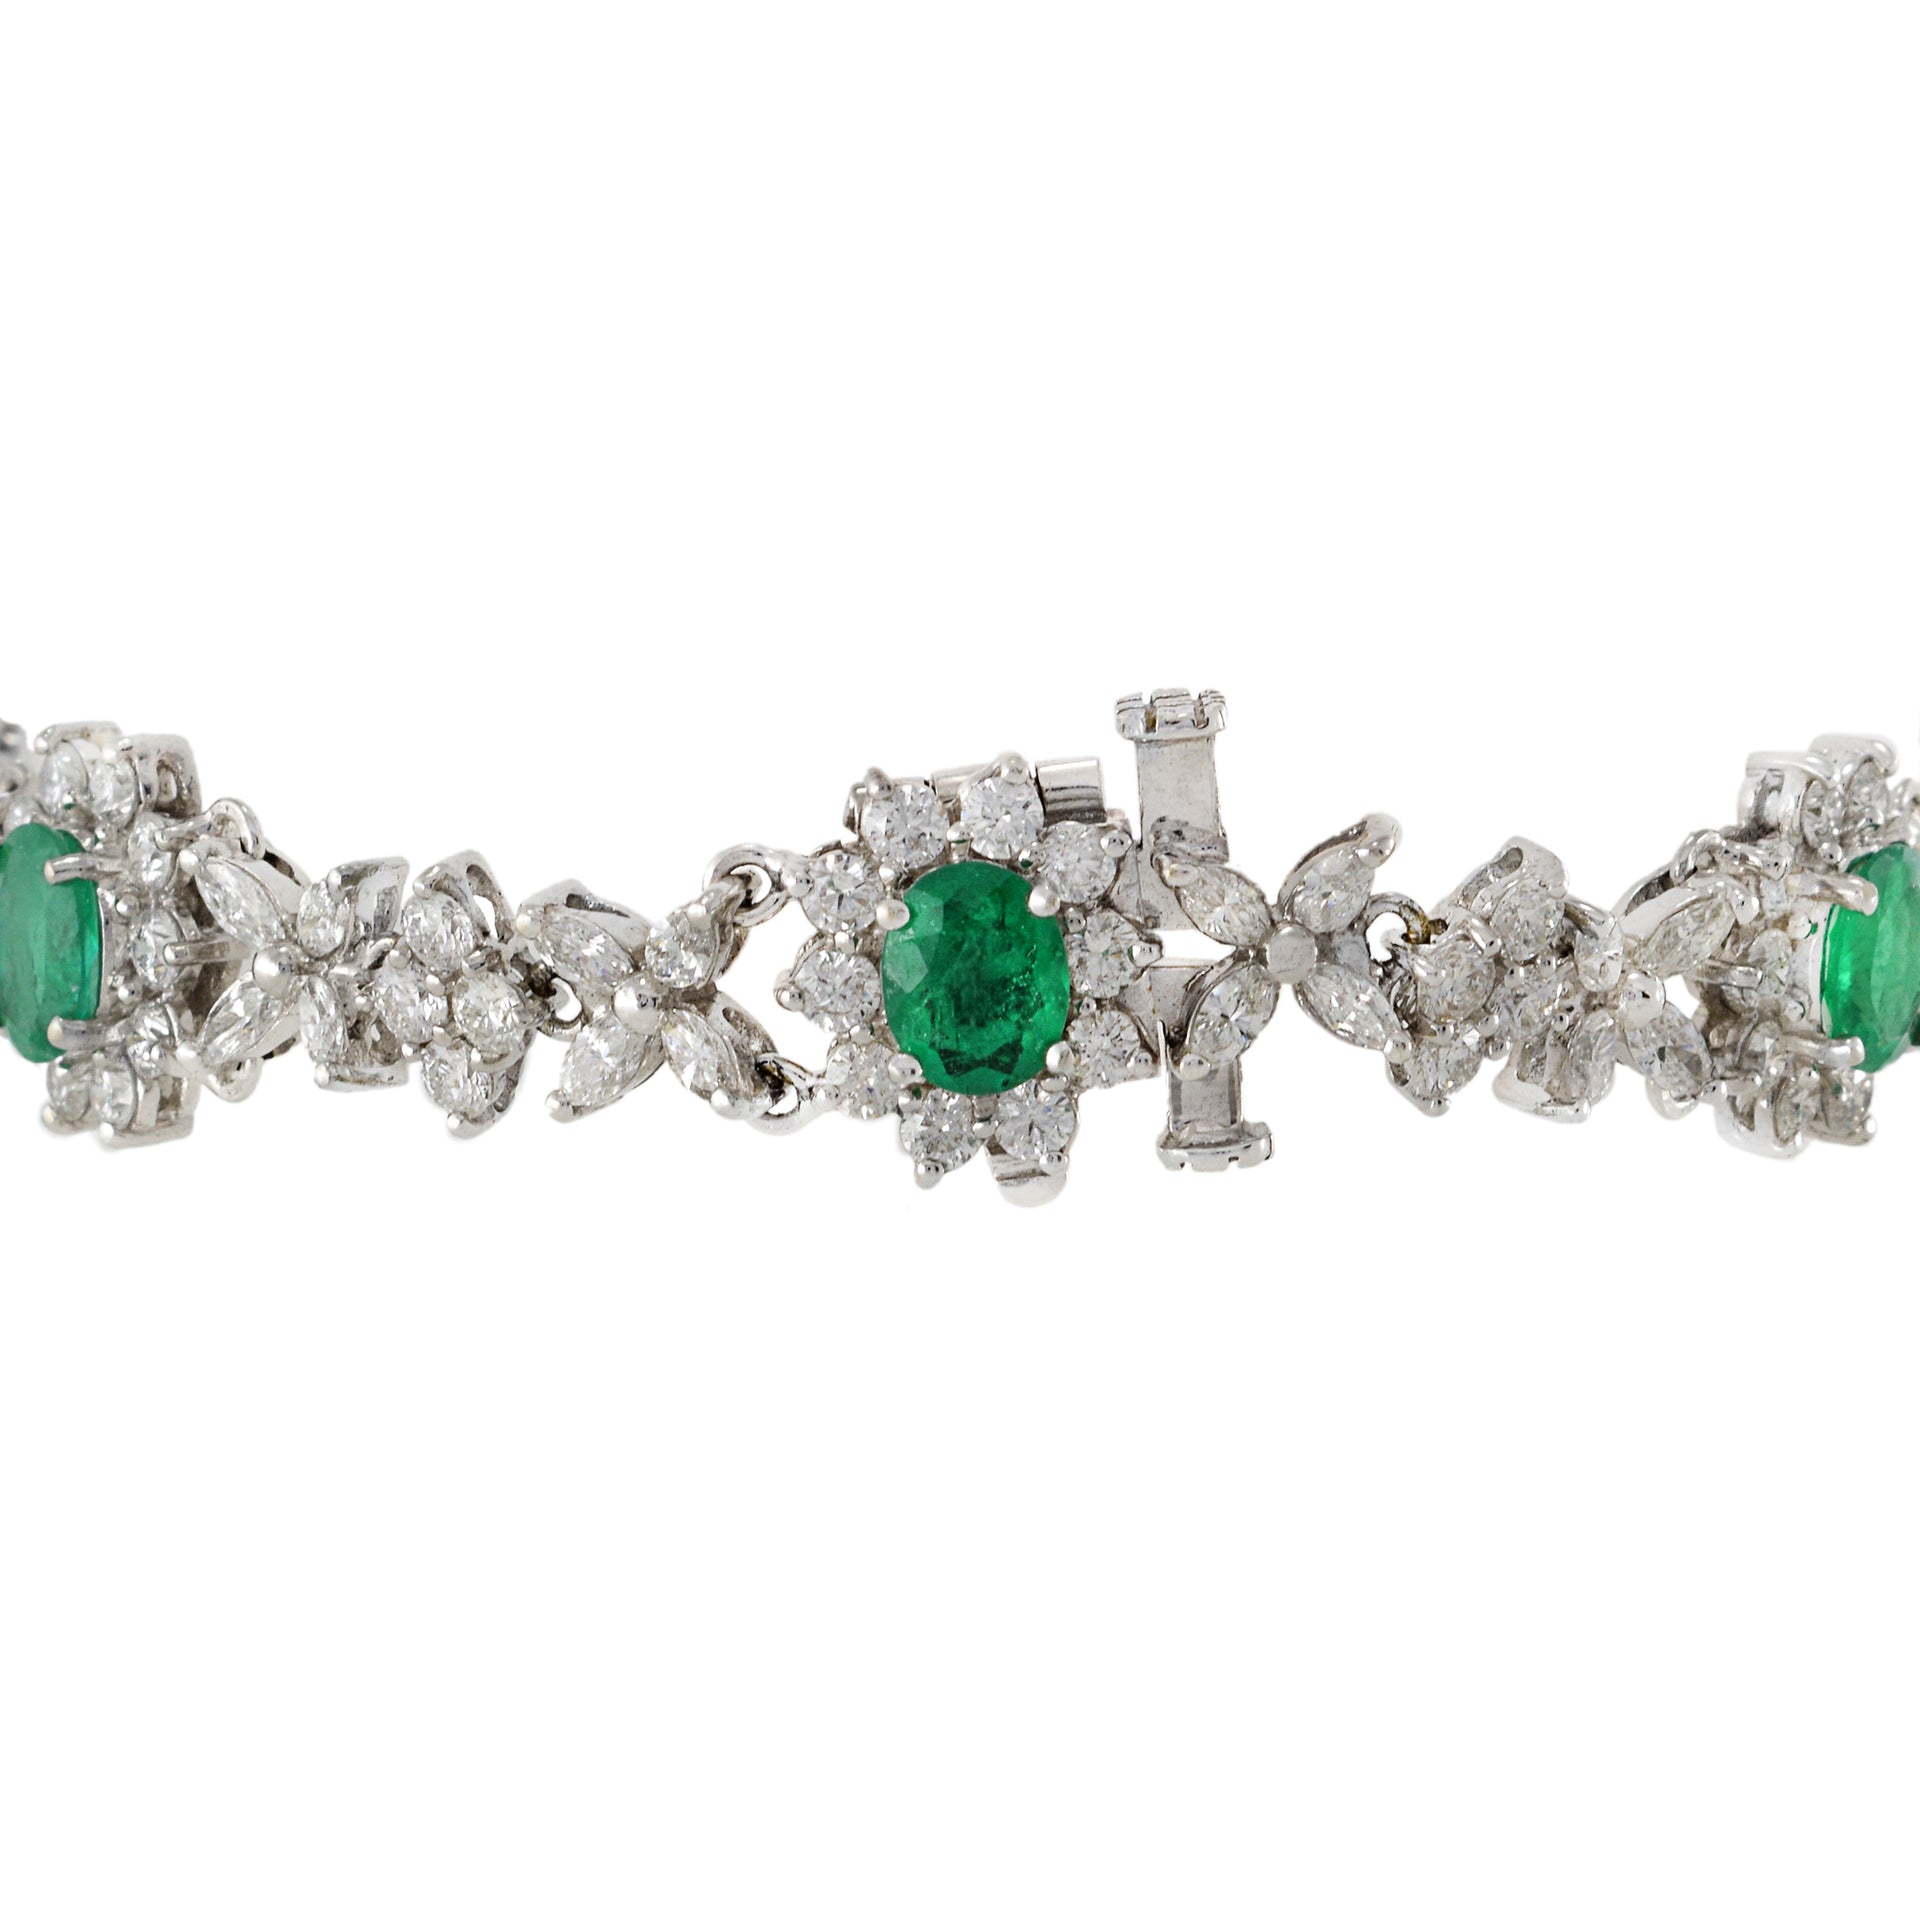 18kt White Gold Emerald Bracelet with Diamonds